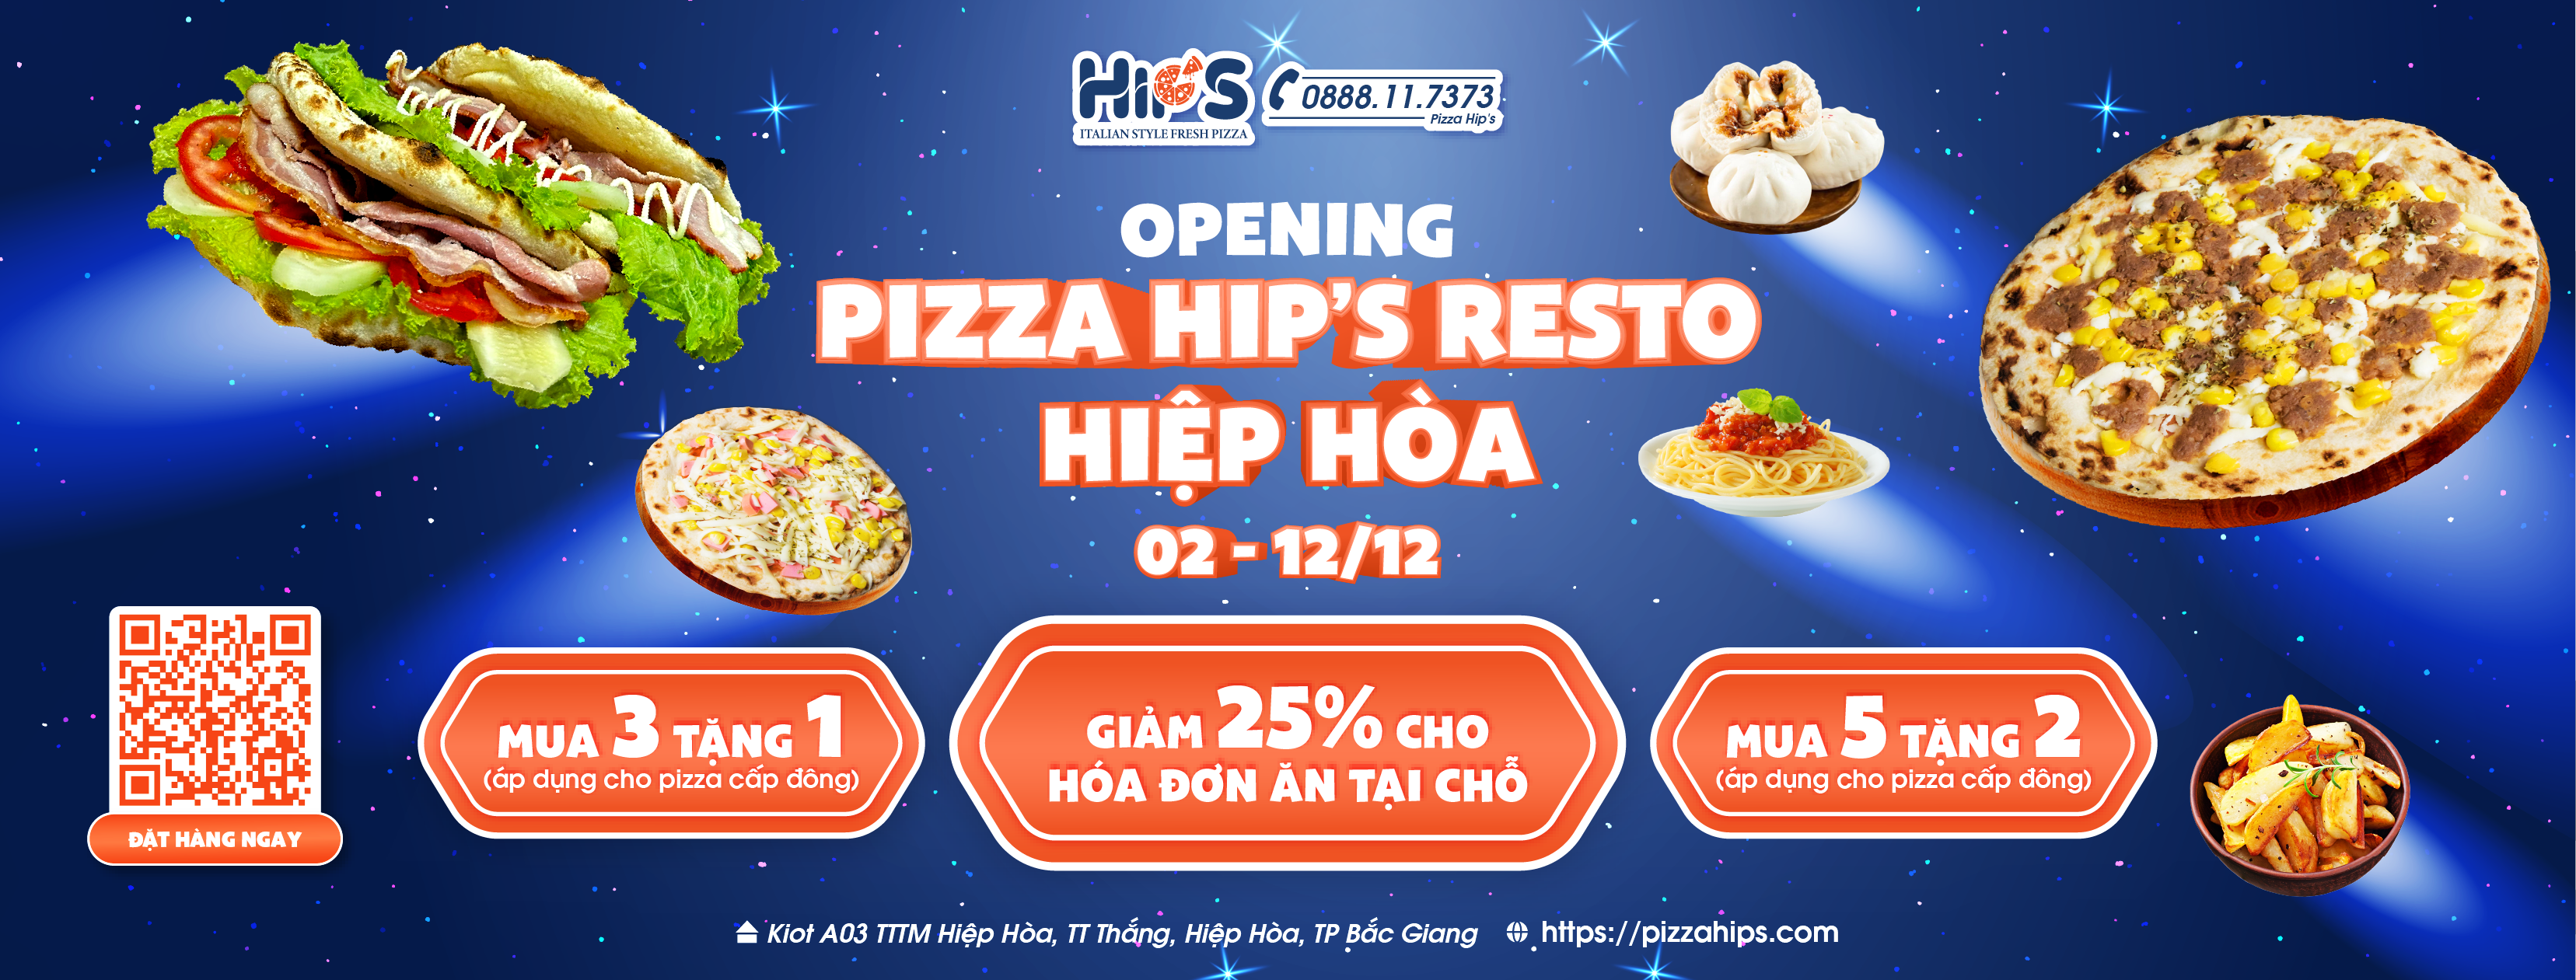 hinh-anh-pizza-hip's-resto-hiep-hoa